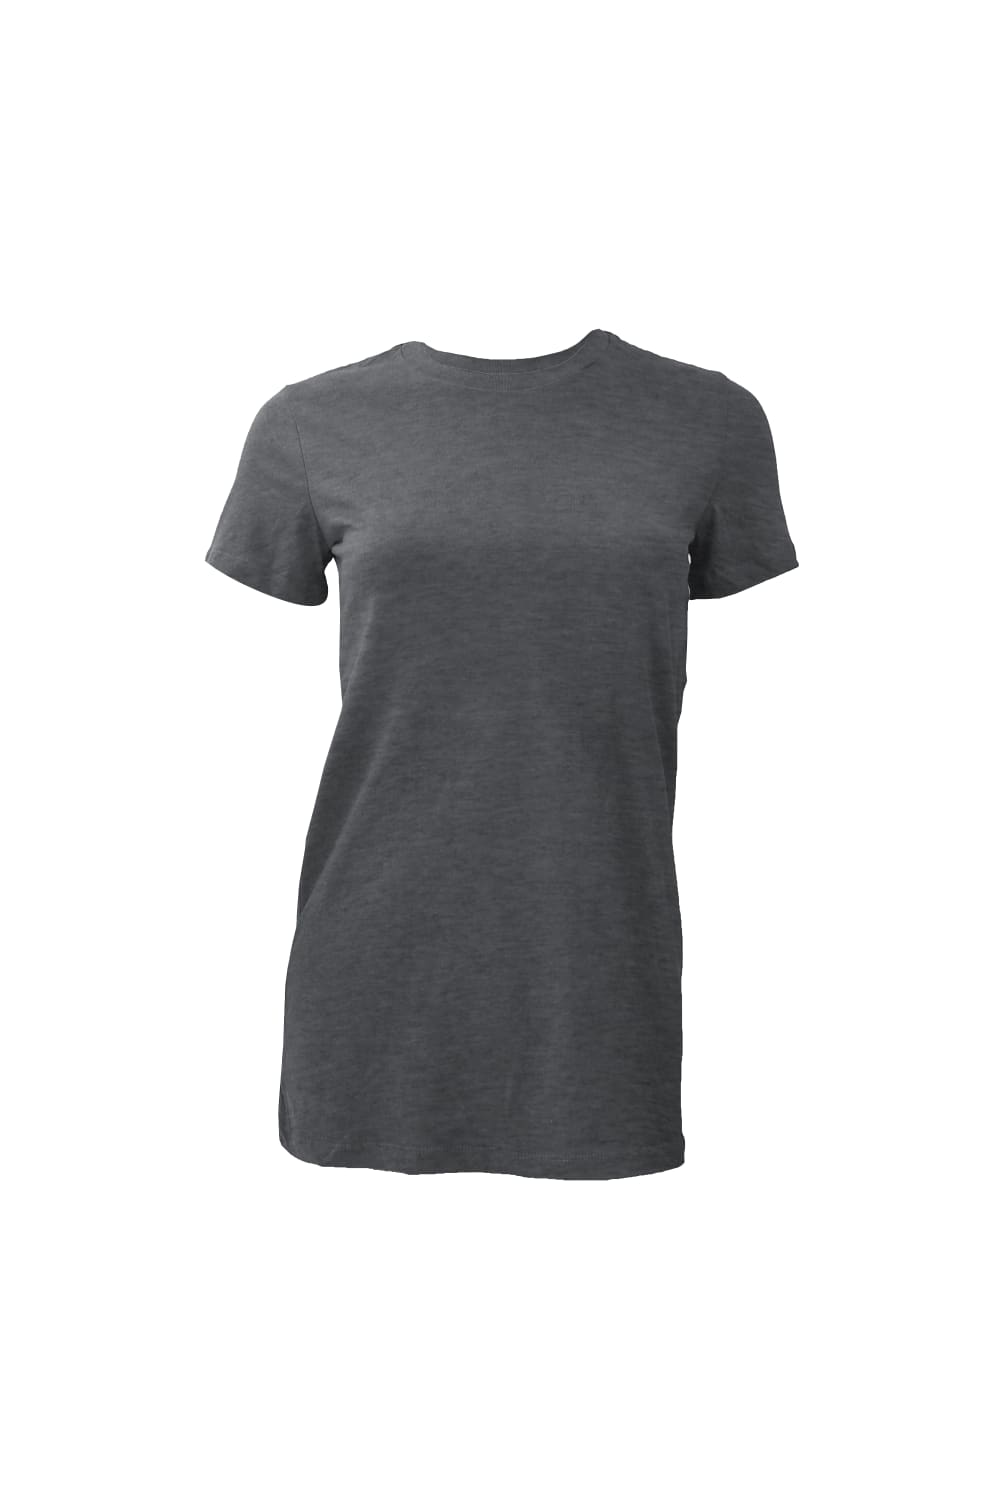 Bella Ladies/Womens The Favorite Tee Short Sleeve T-Shirt (Dark Heather)